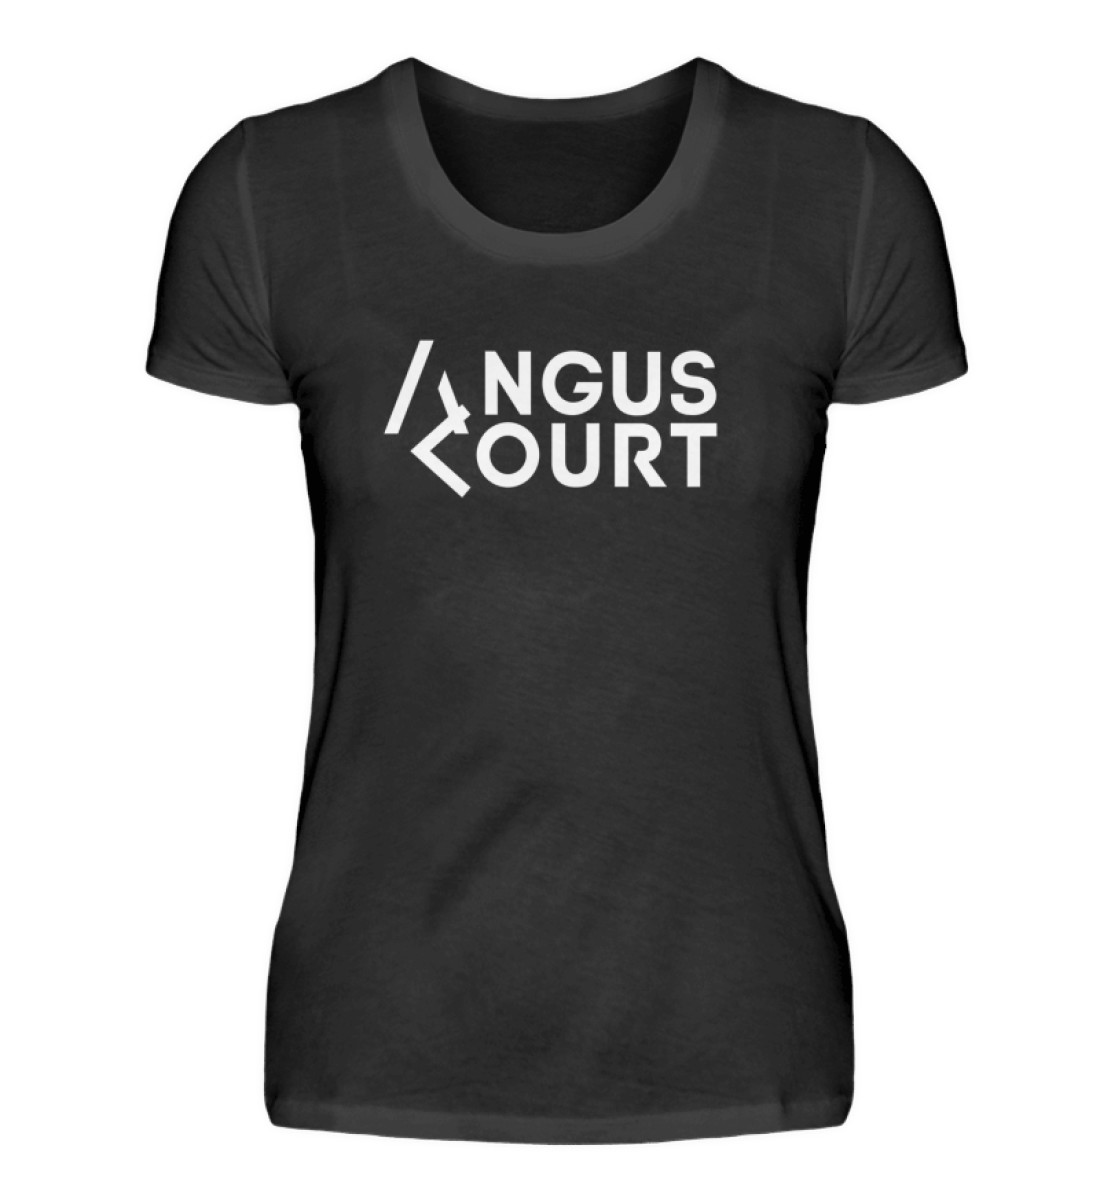 Angus Court Bull Shirts Women - Damen Premiumshirt-16